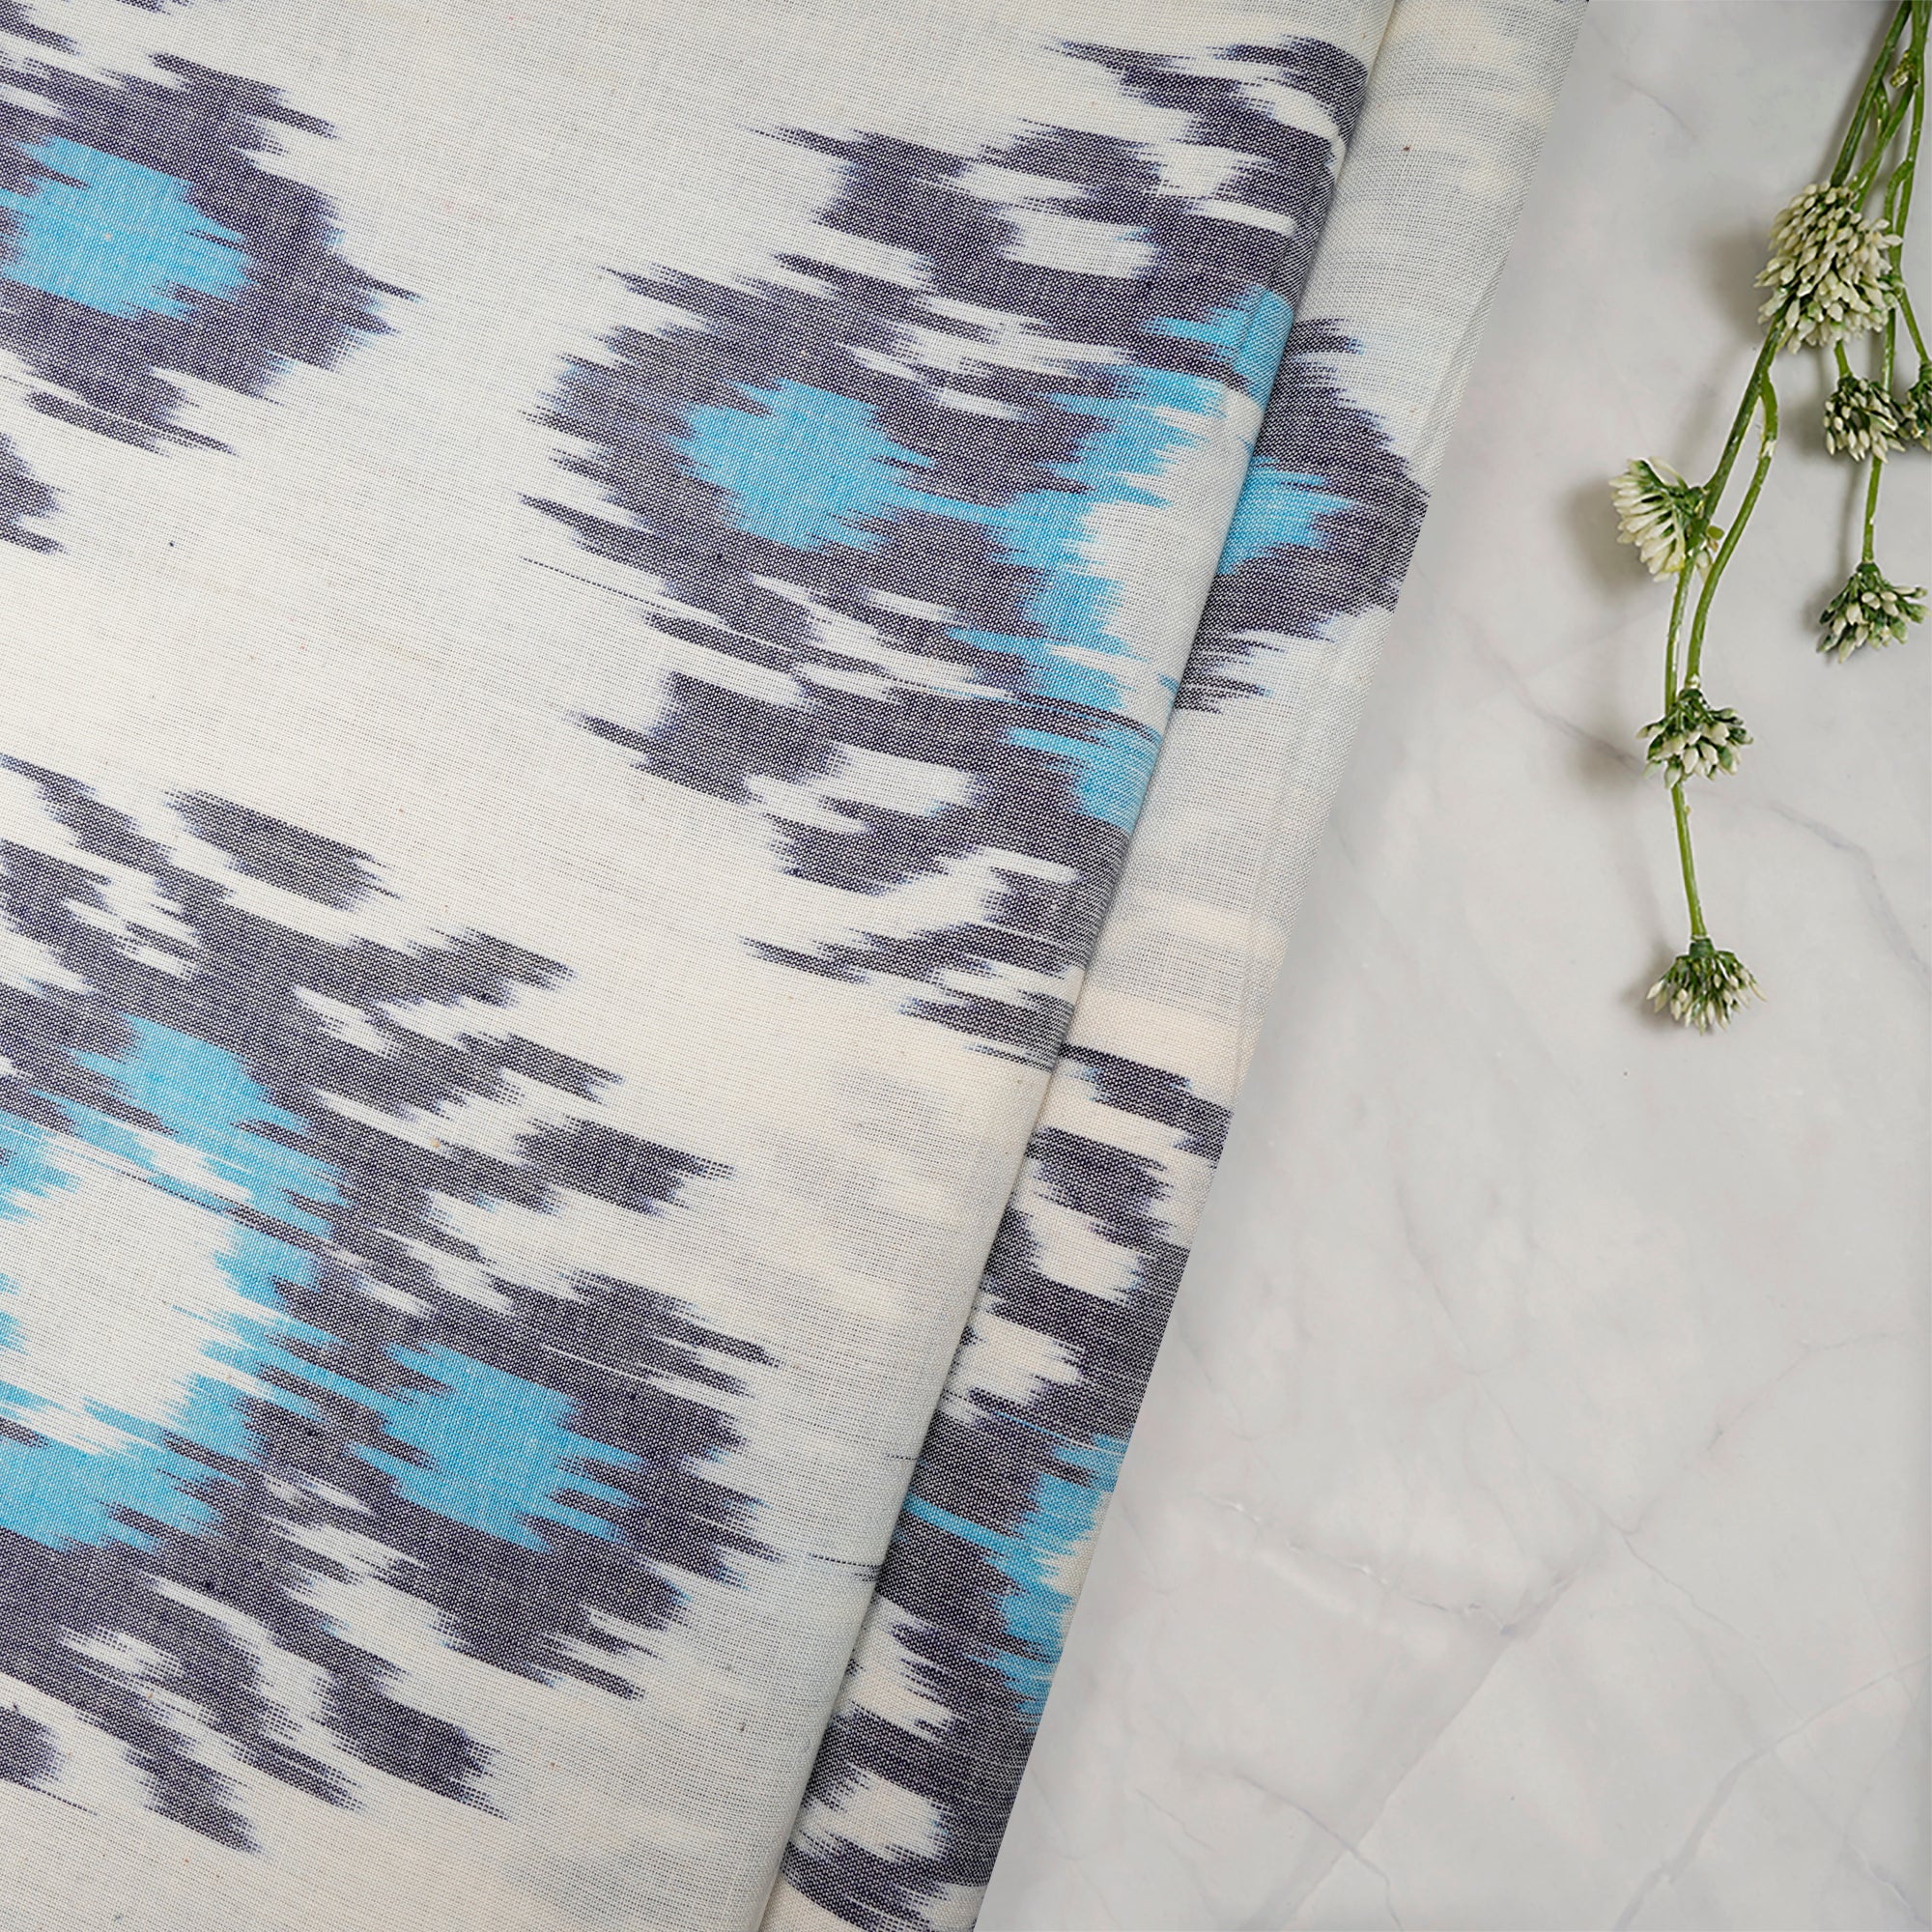 White-Blue Mercerized Washed Uzbek Motif Woven Ikat Cotton Fabric